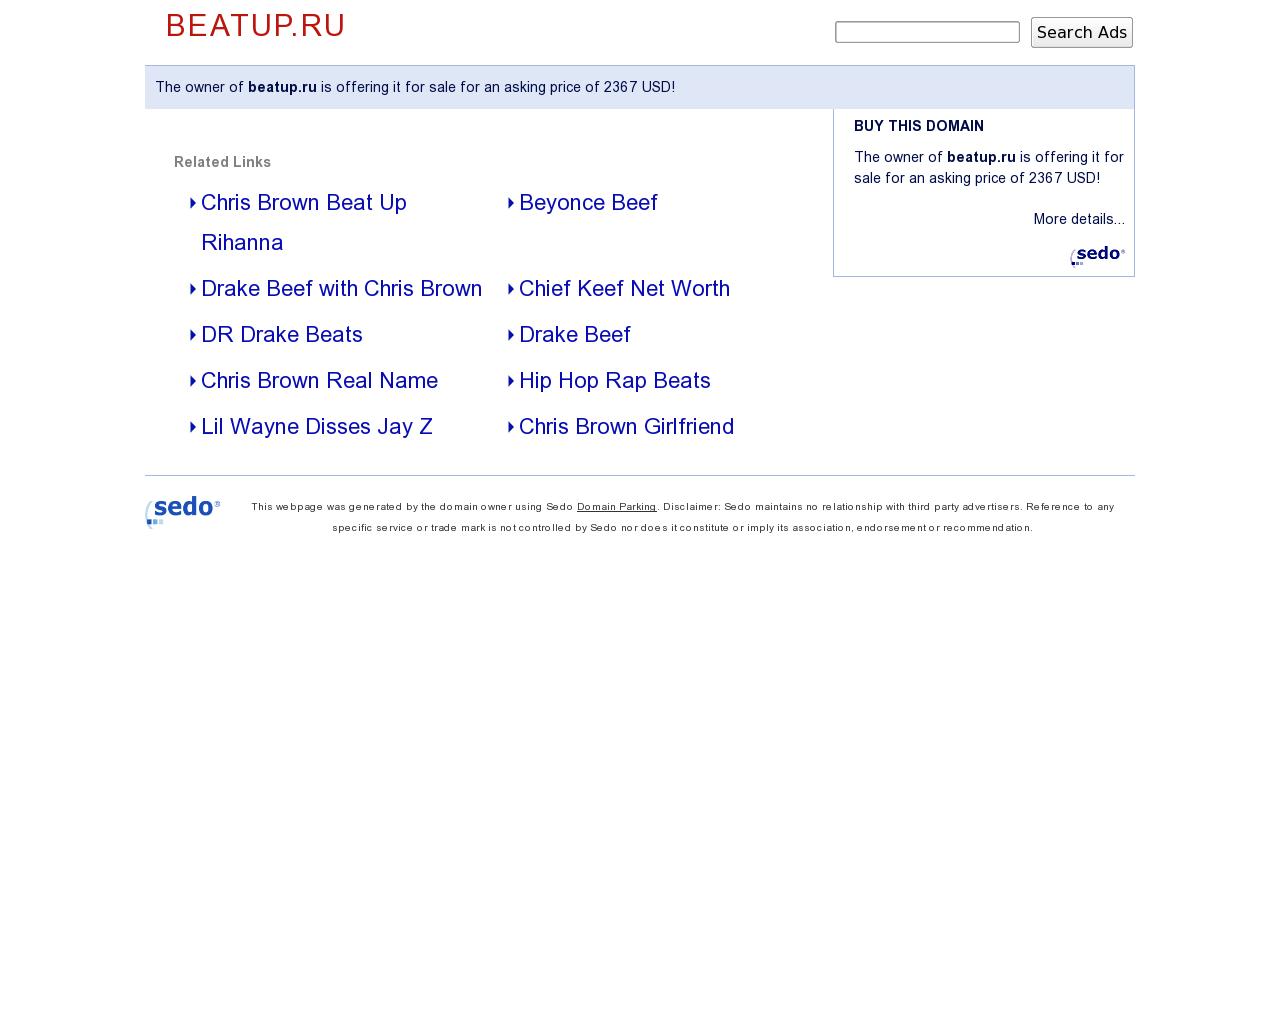 Изображение сайта beatup.ru в разрешении 1280x1024